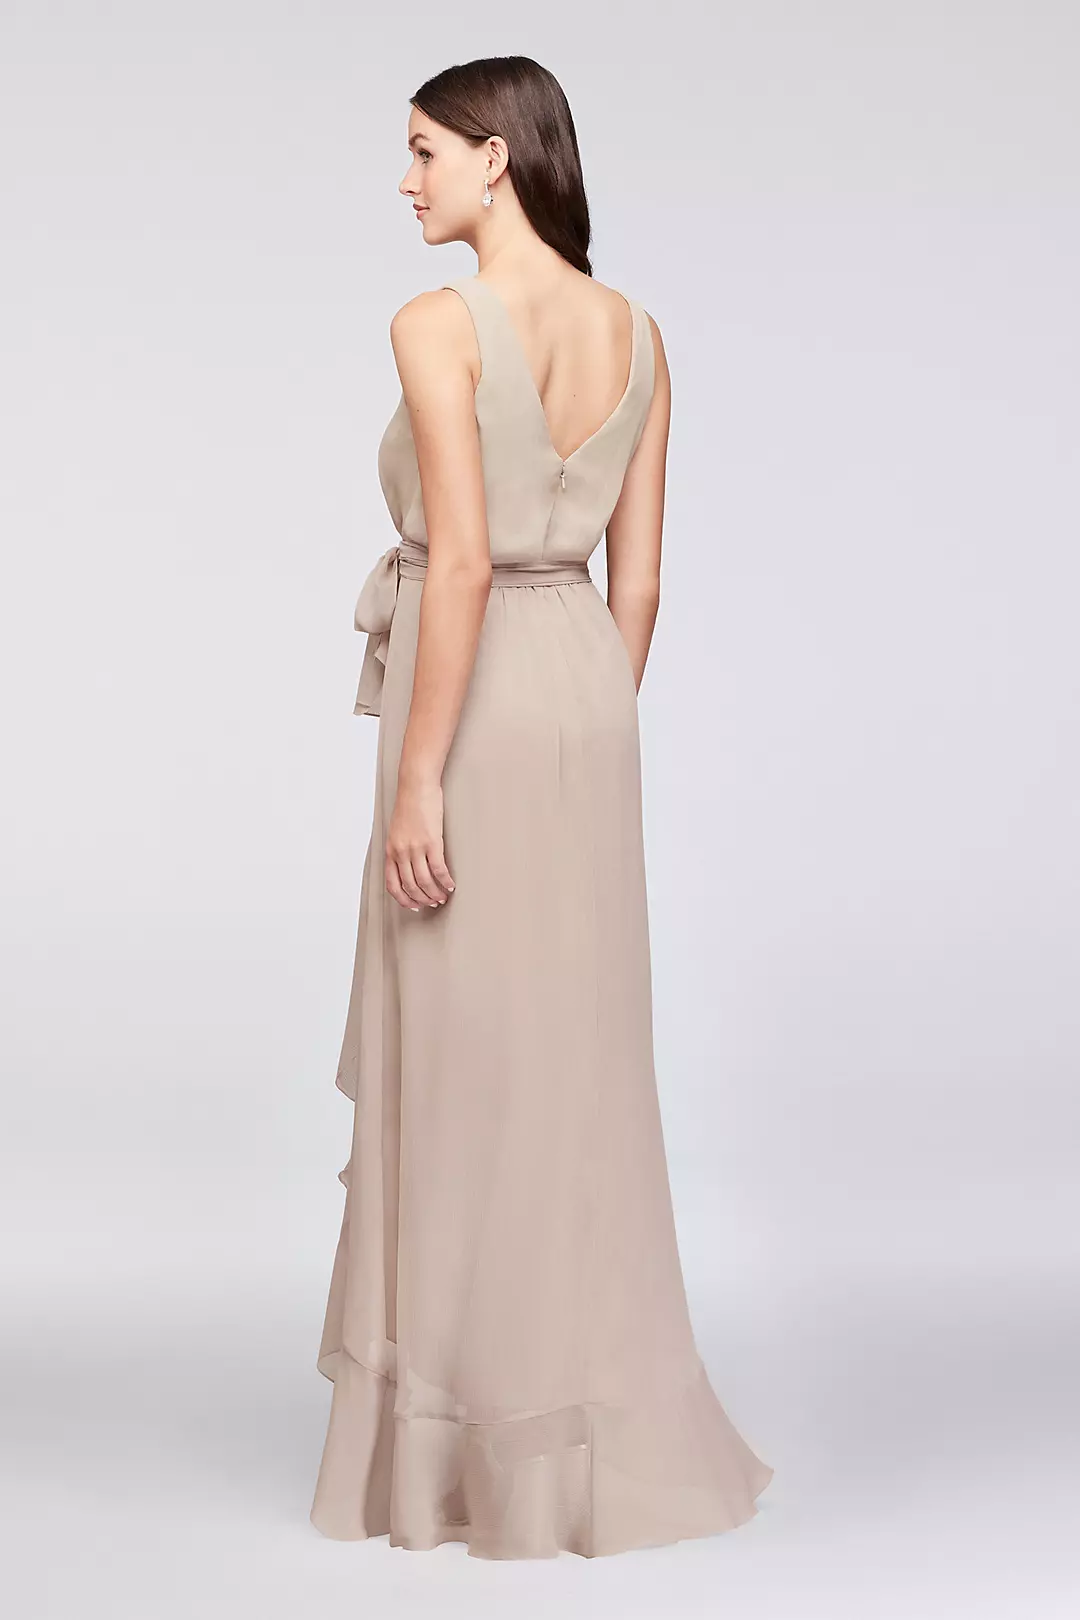 Ruffle-Trim Chiffon Faux-Wrap Bridesmaid Dress Image 3